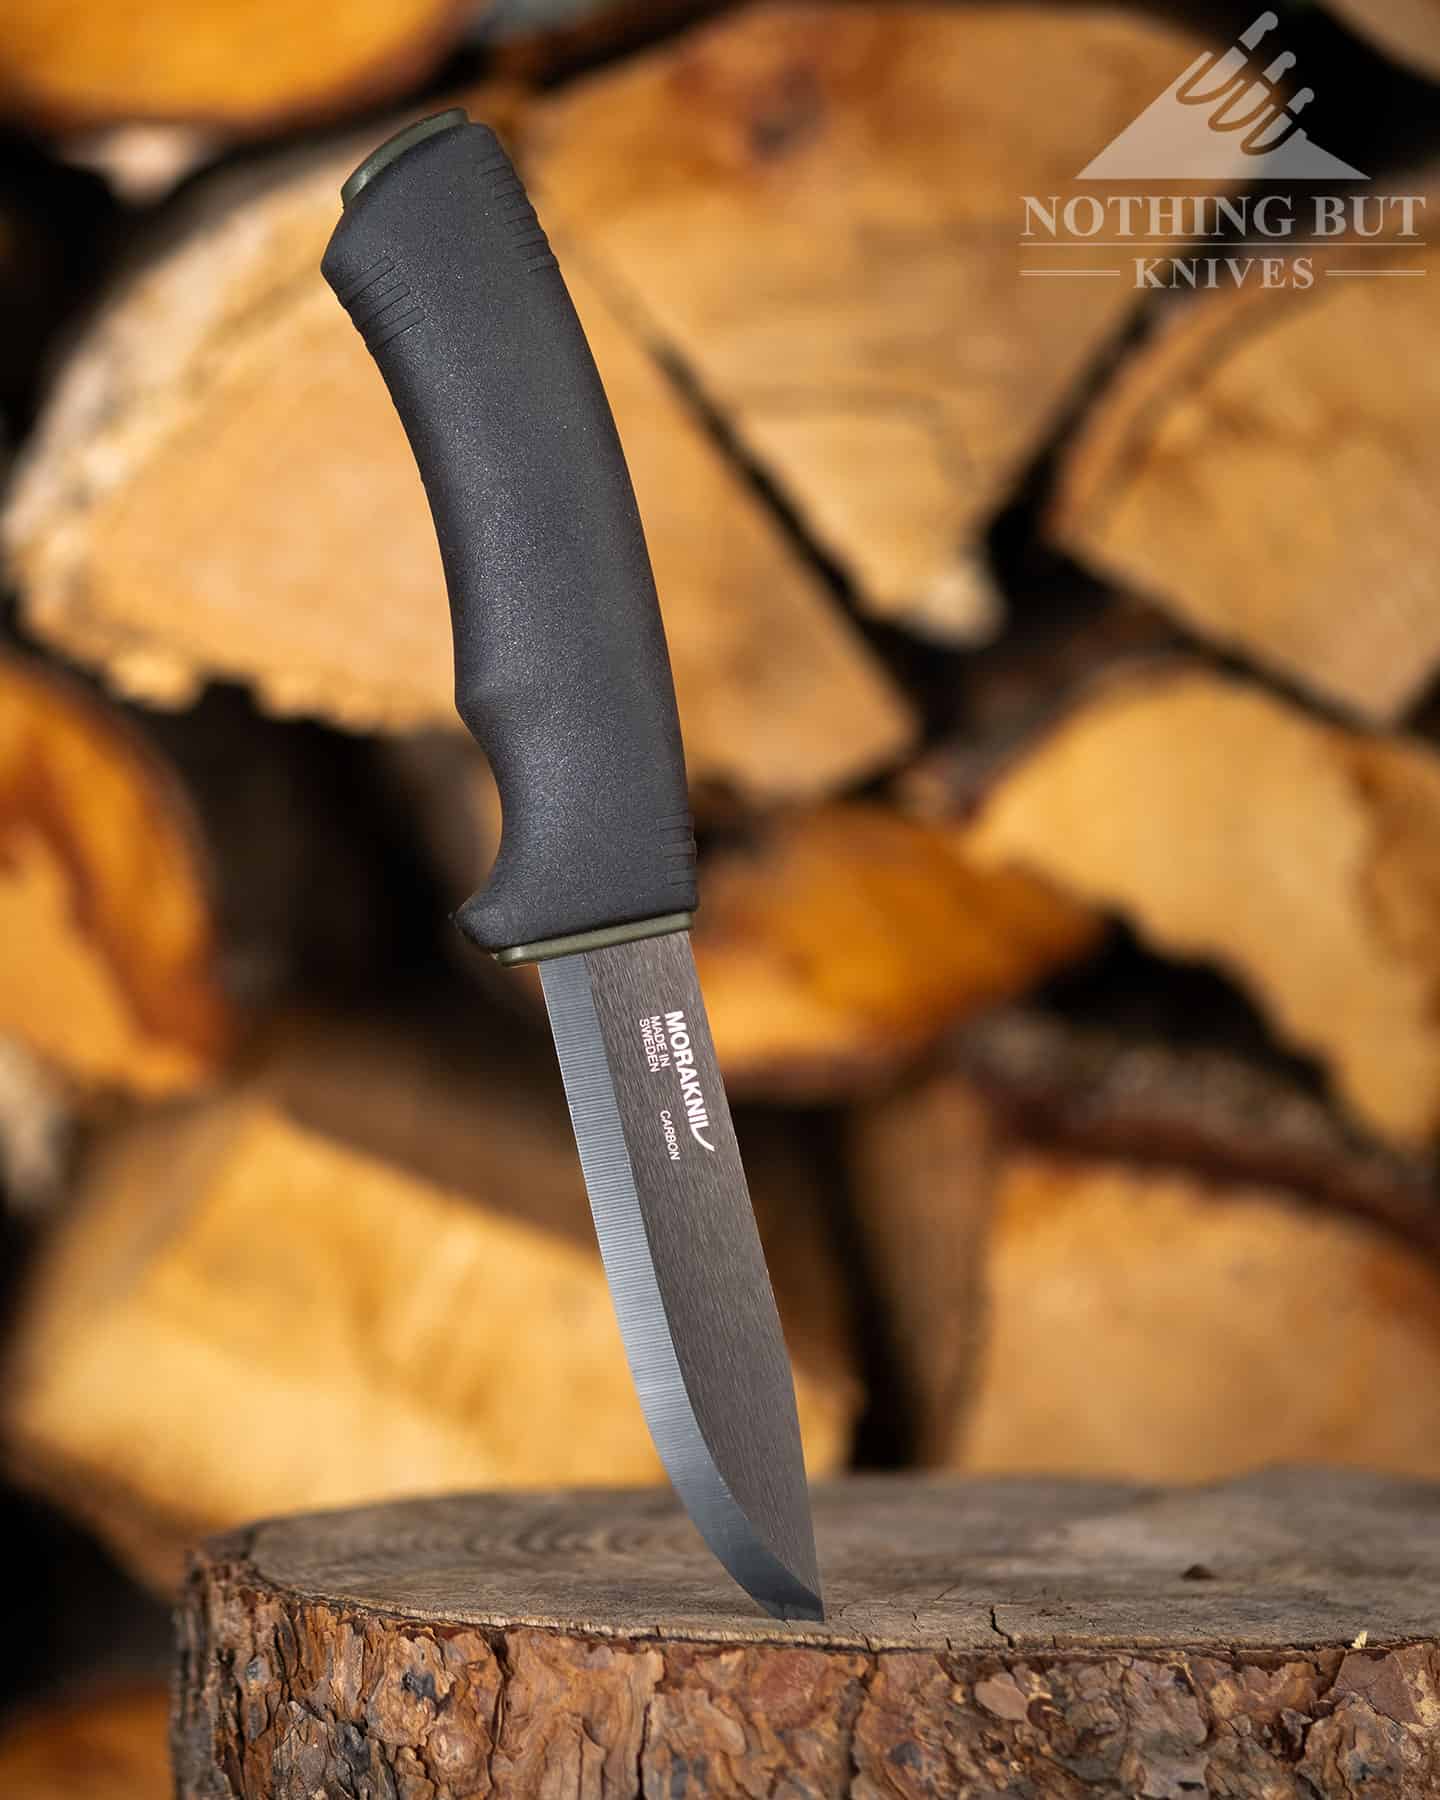 The Mora Buschcraft BlackBlade is a high performing budget bushcraft knife. 